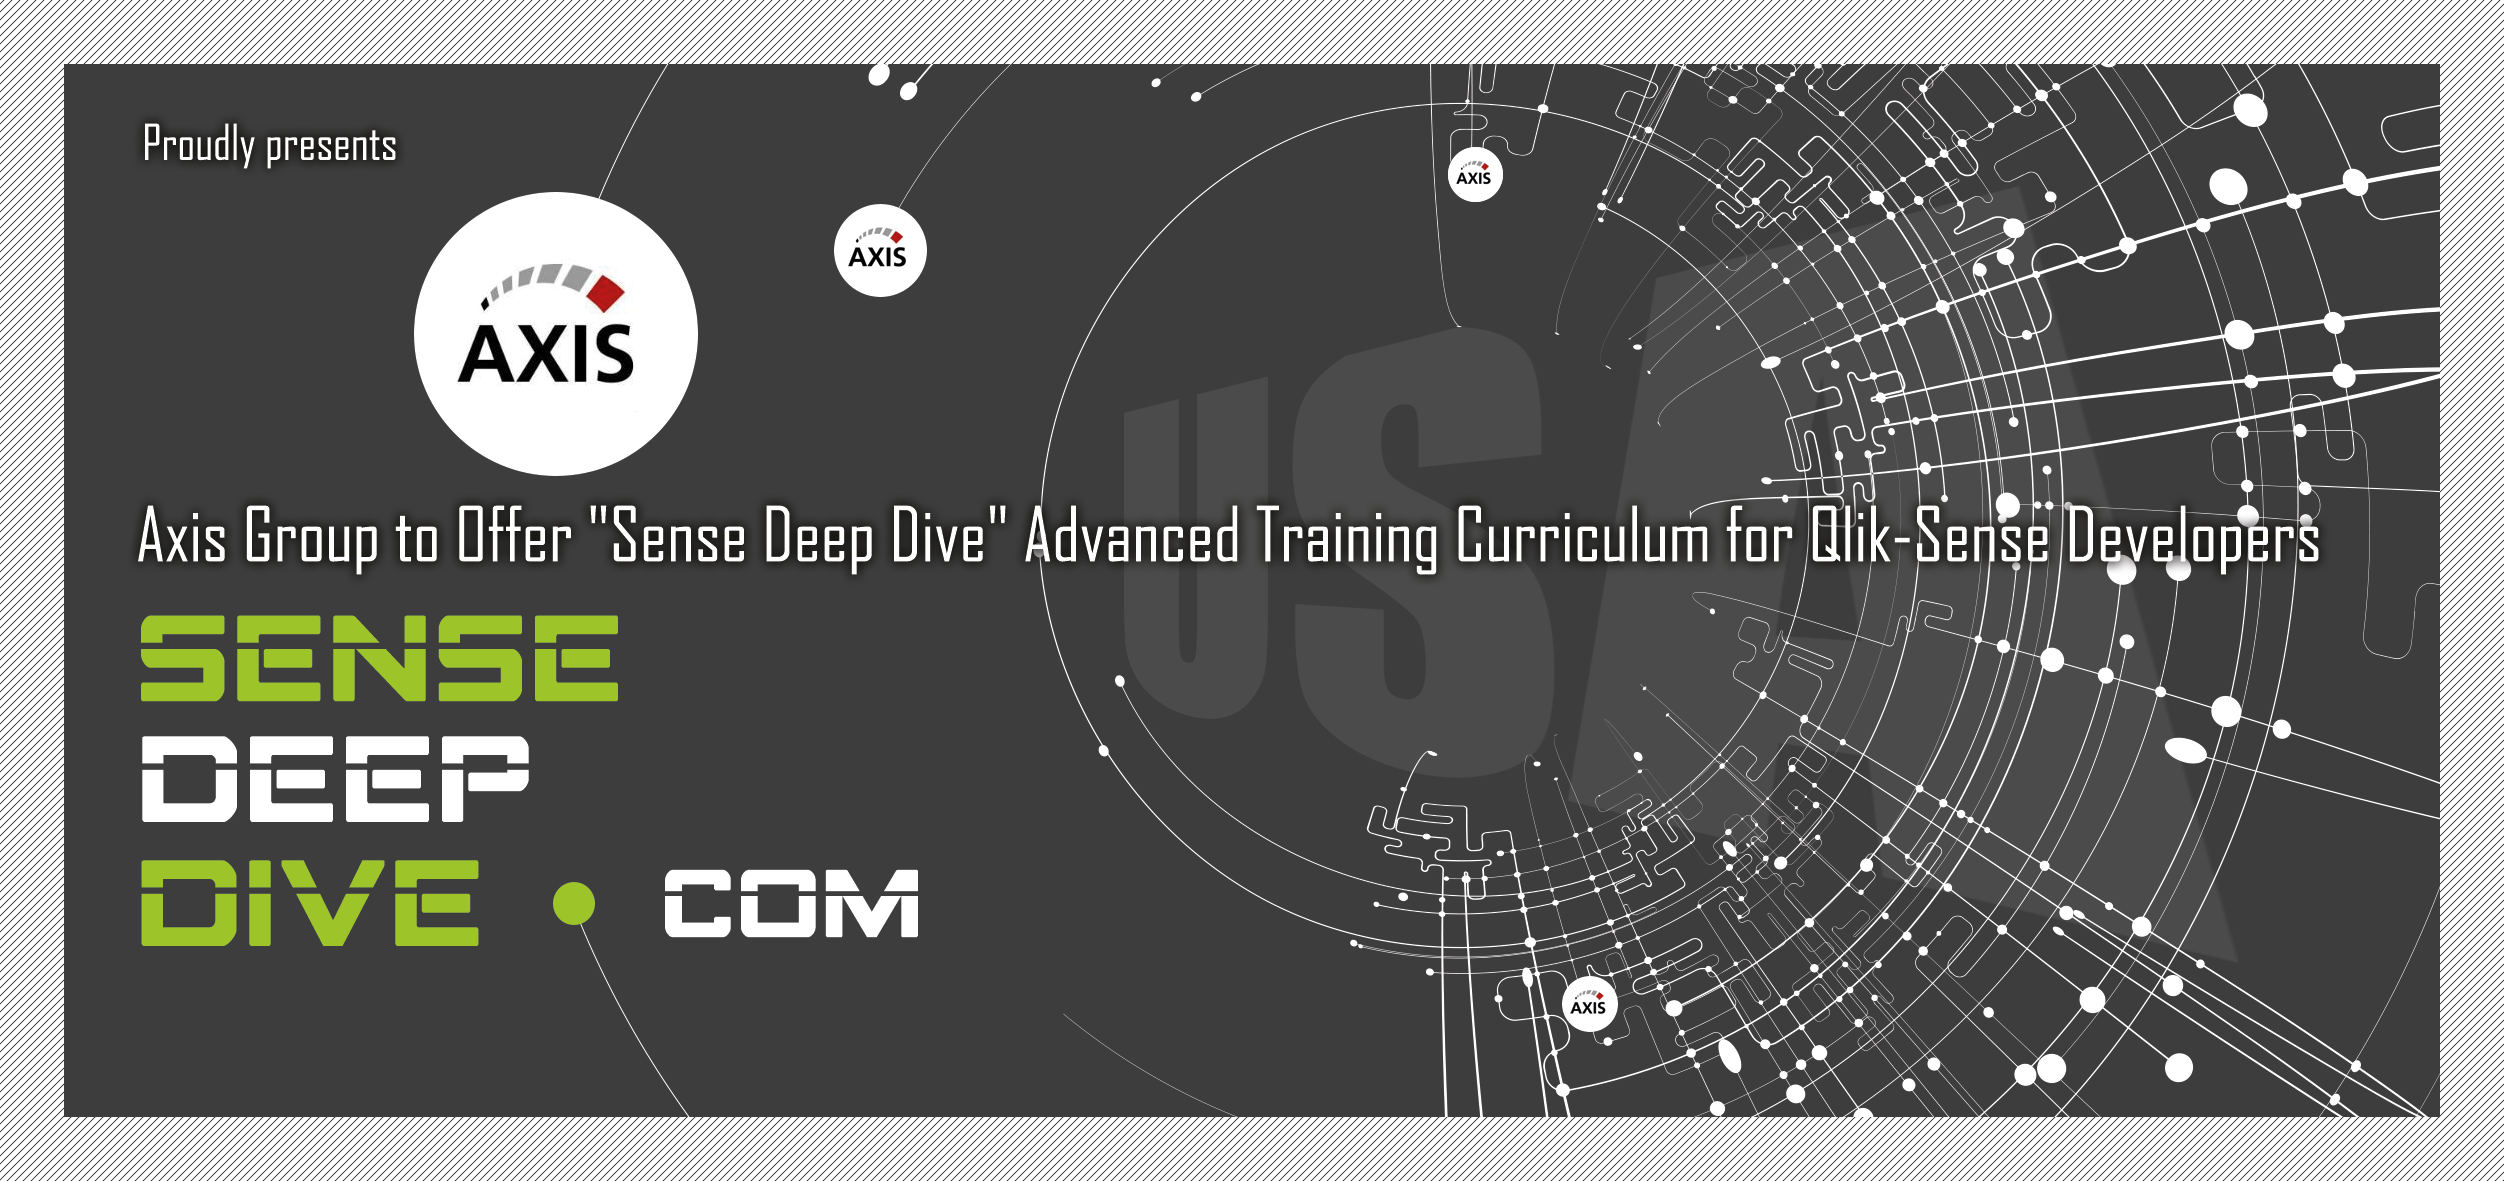 Axis Group to Offer 'Sense Deep Dive' Advanced Training Curriculum for Qlik-Sense Developers